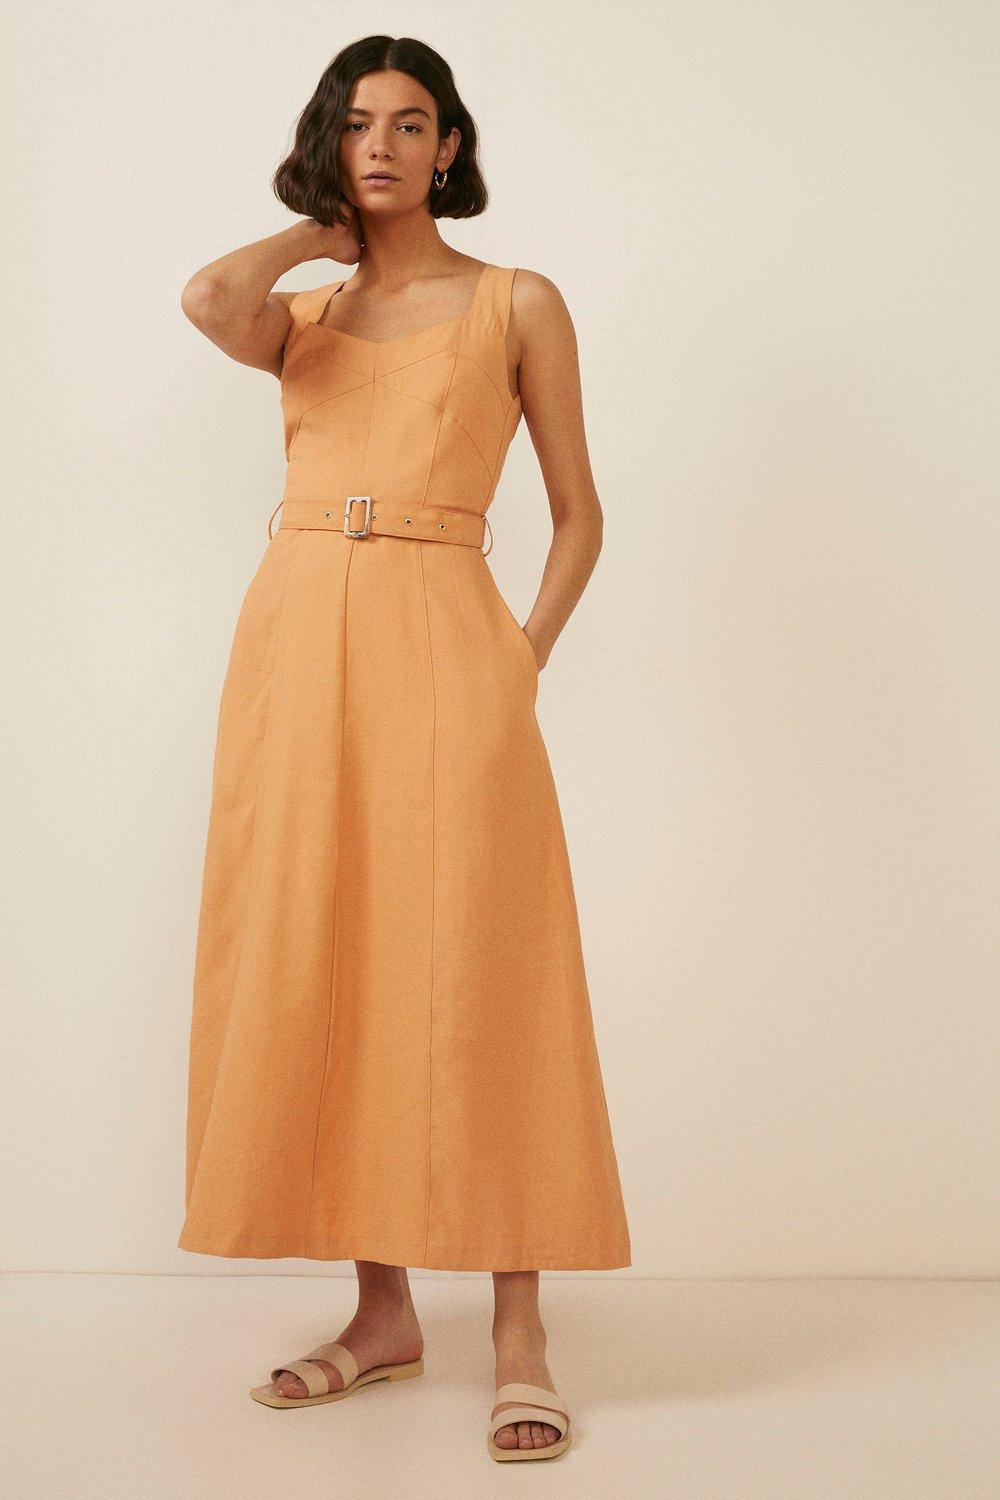 Apricot Linen Dress